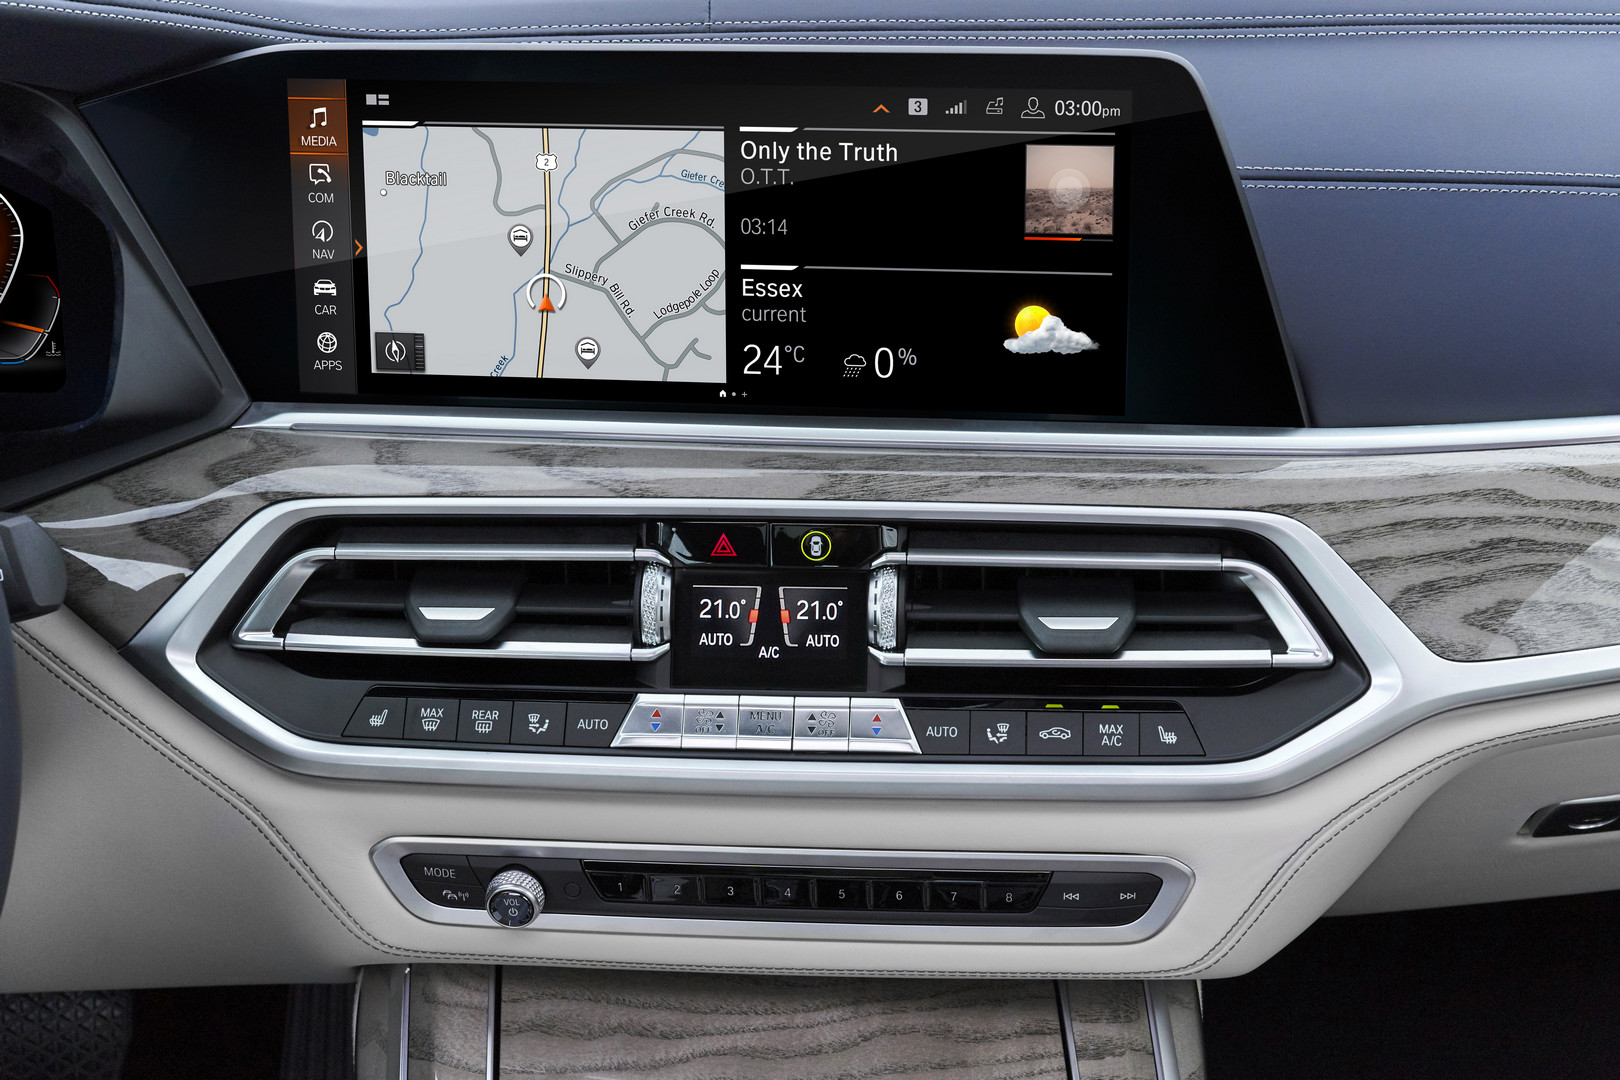 2019 BMW X7 Interface Screen